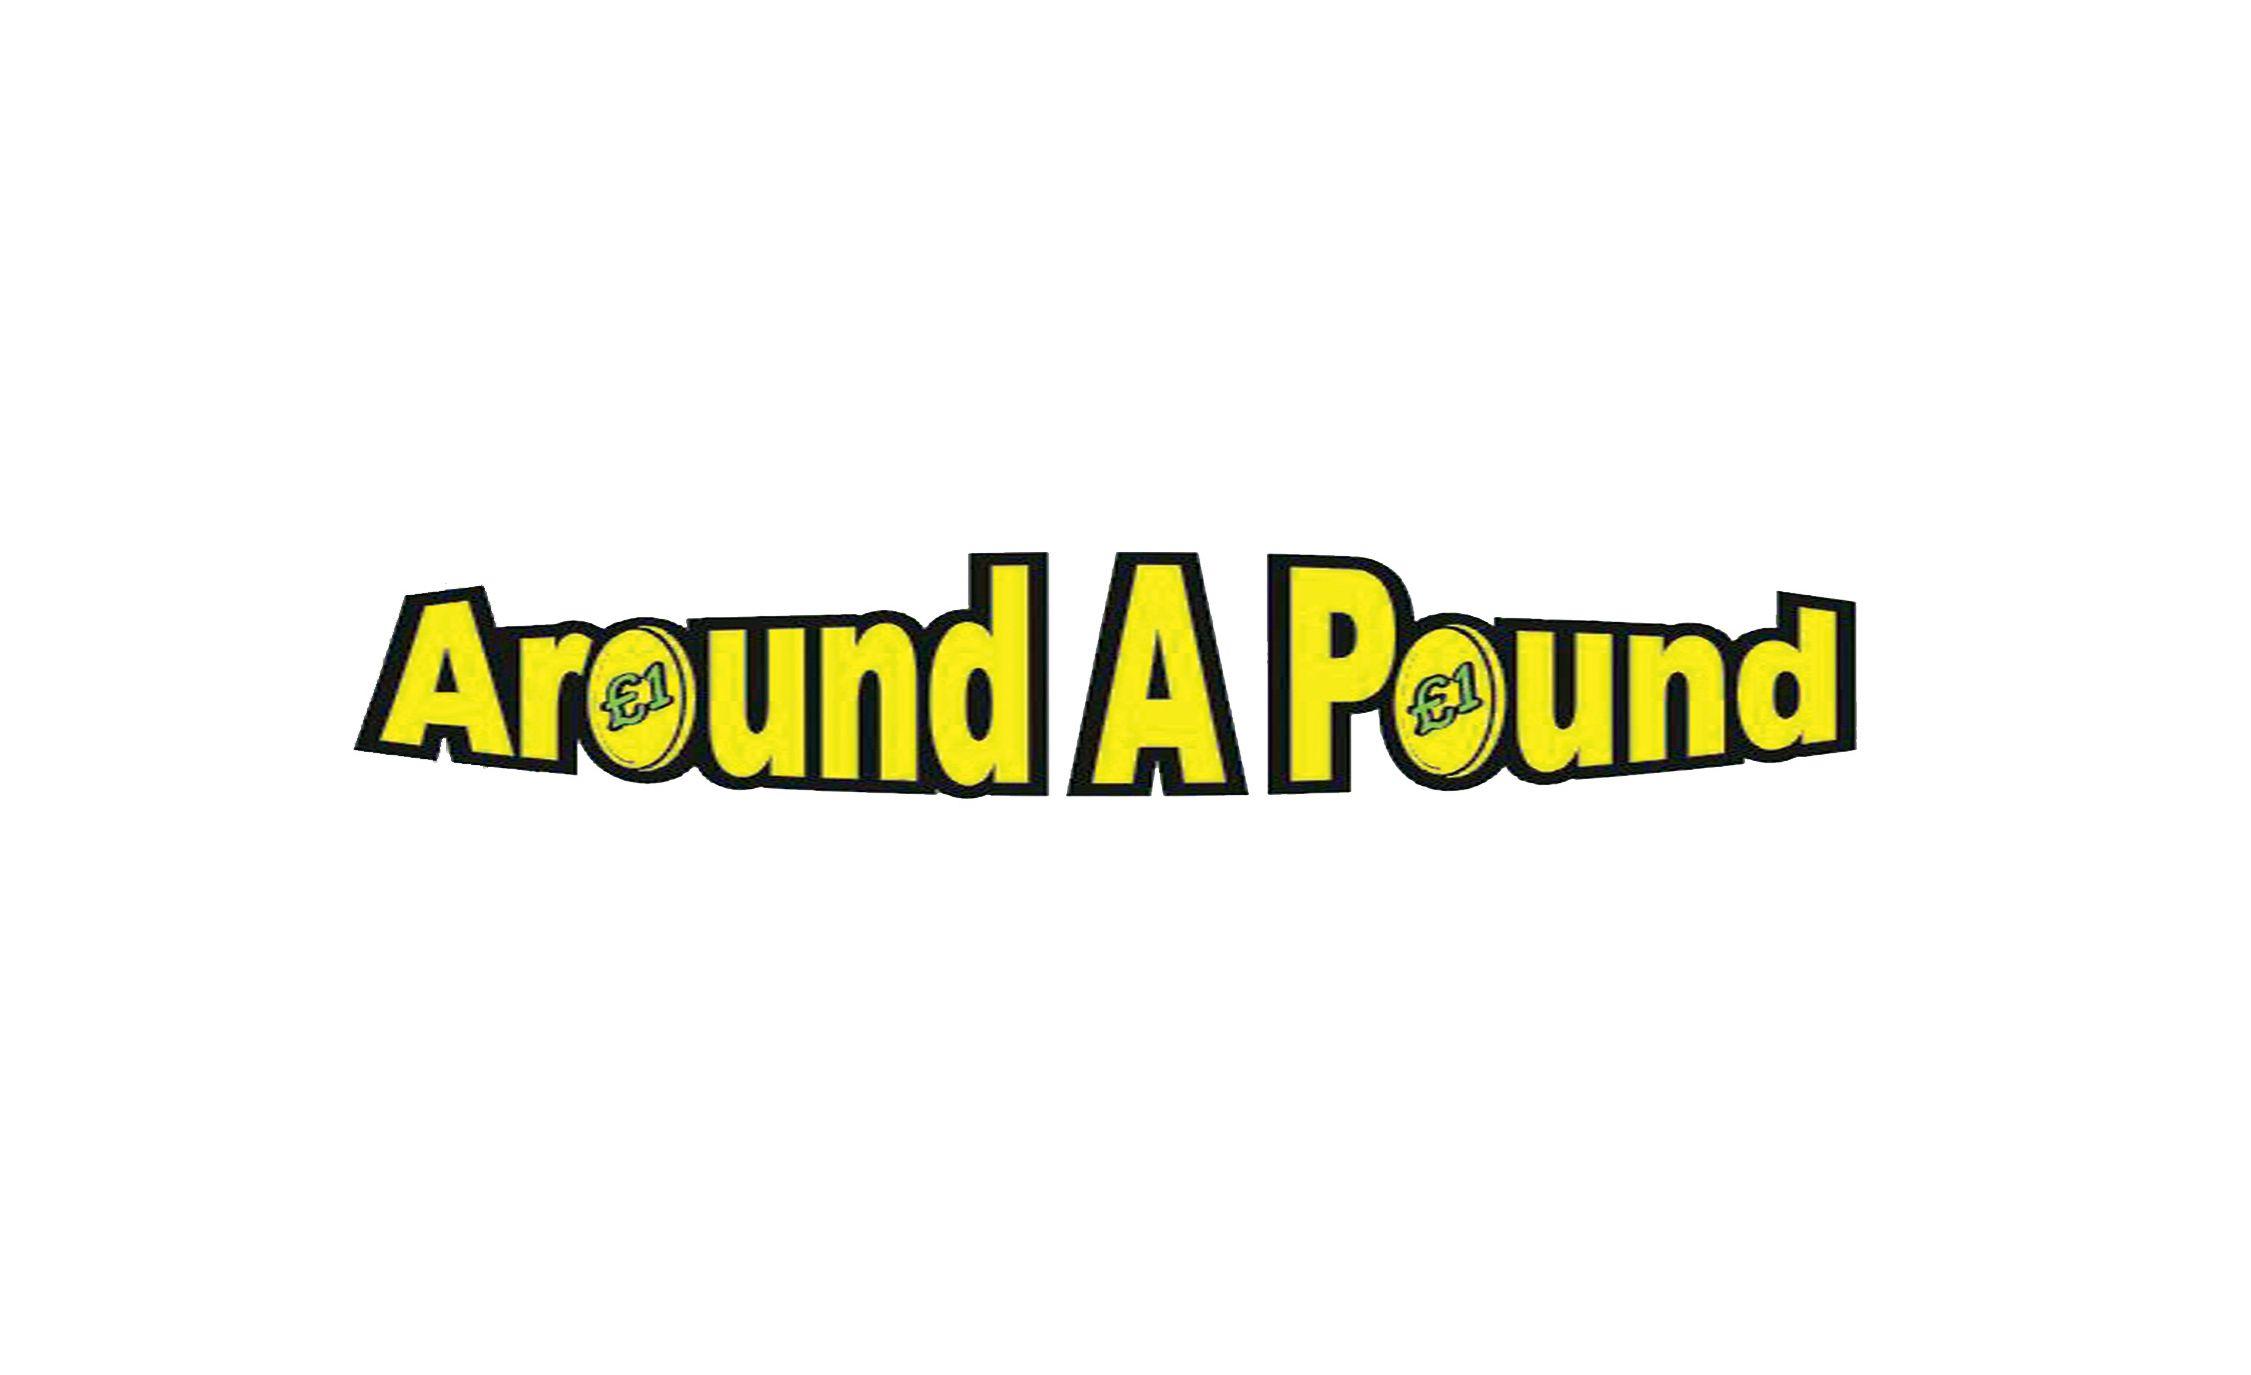 Pound Logo - around-a-pound-logo - Ulster Grand PrixUlster Grand Prix